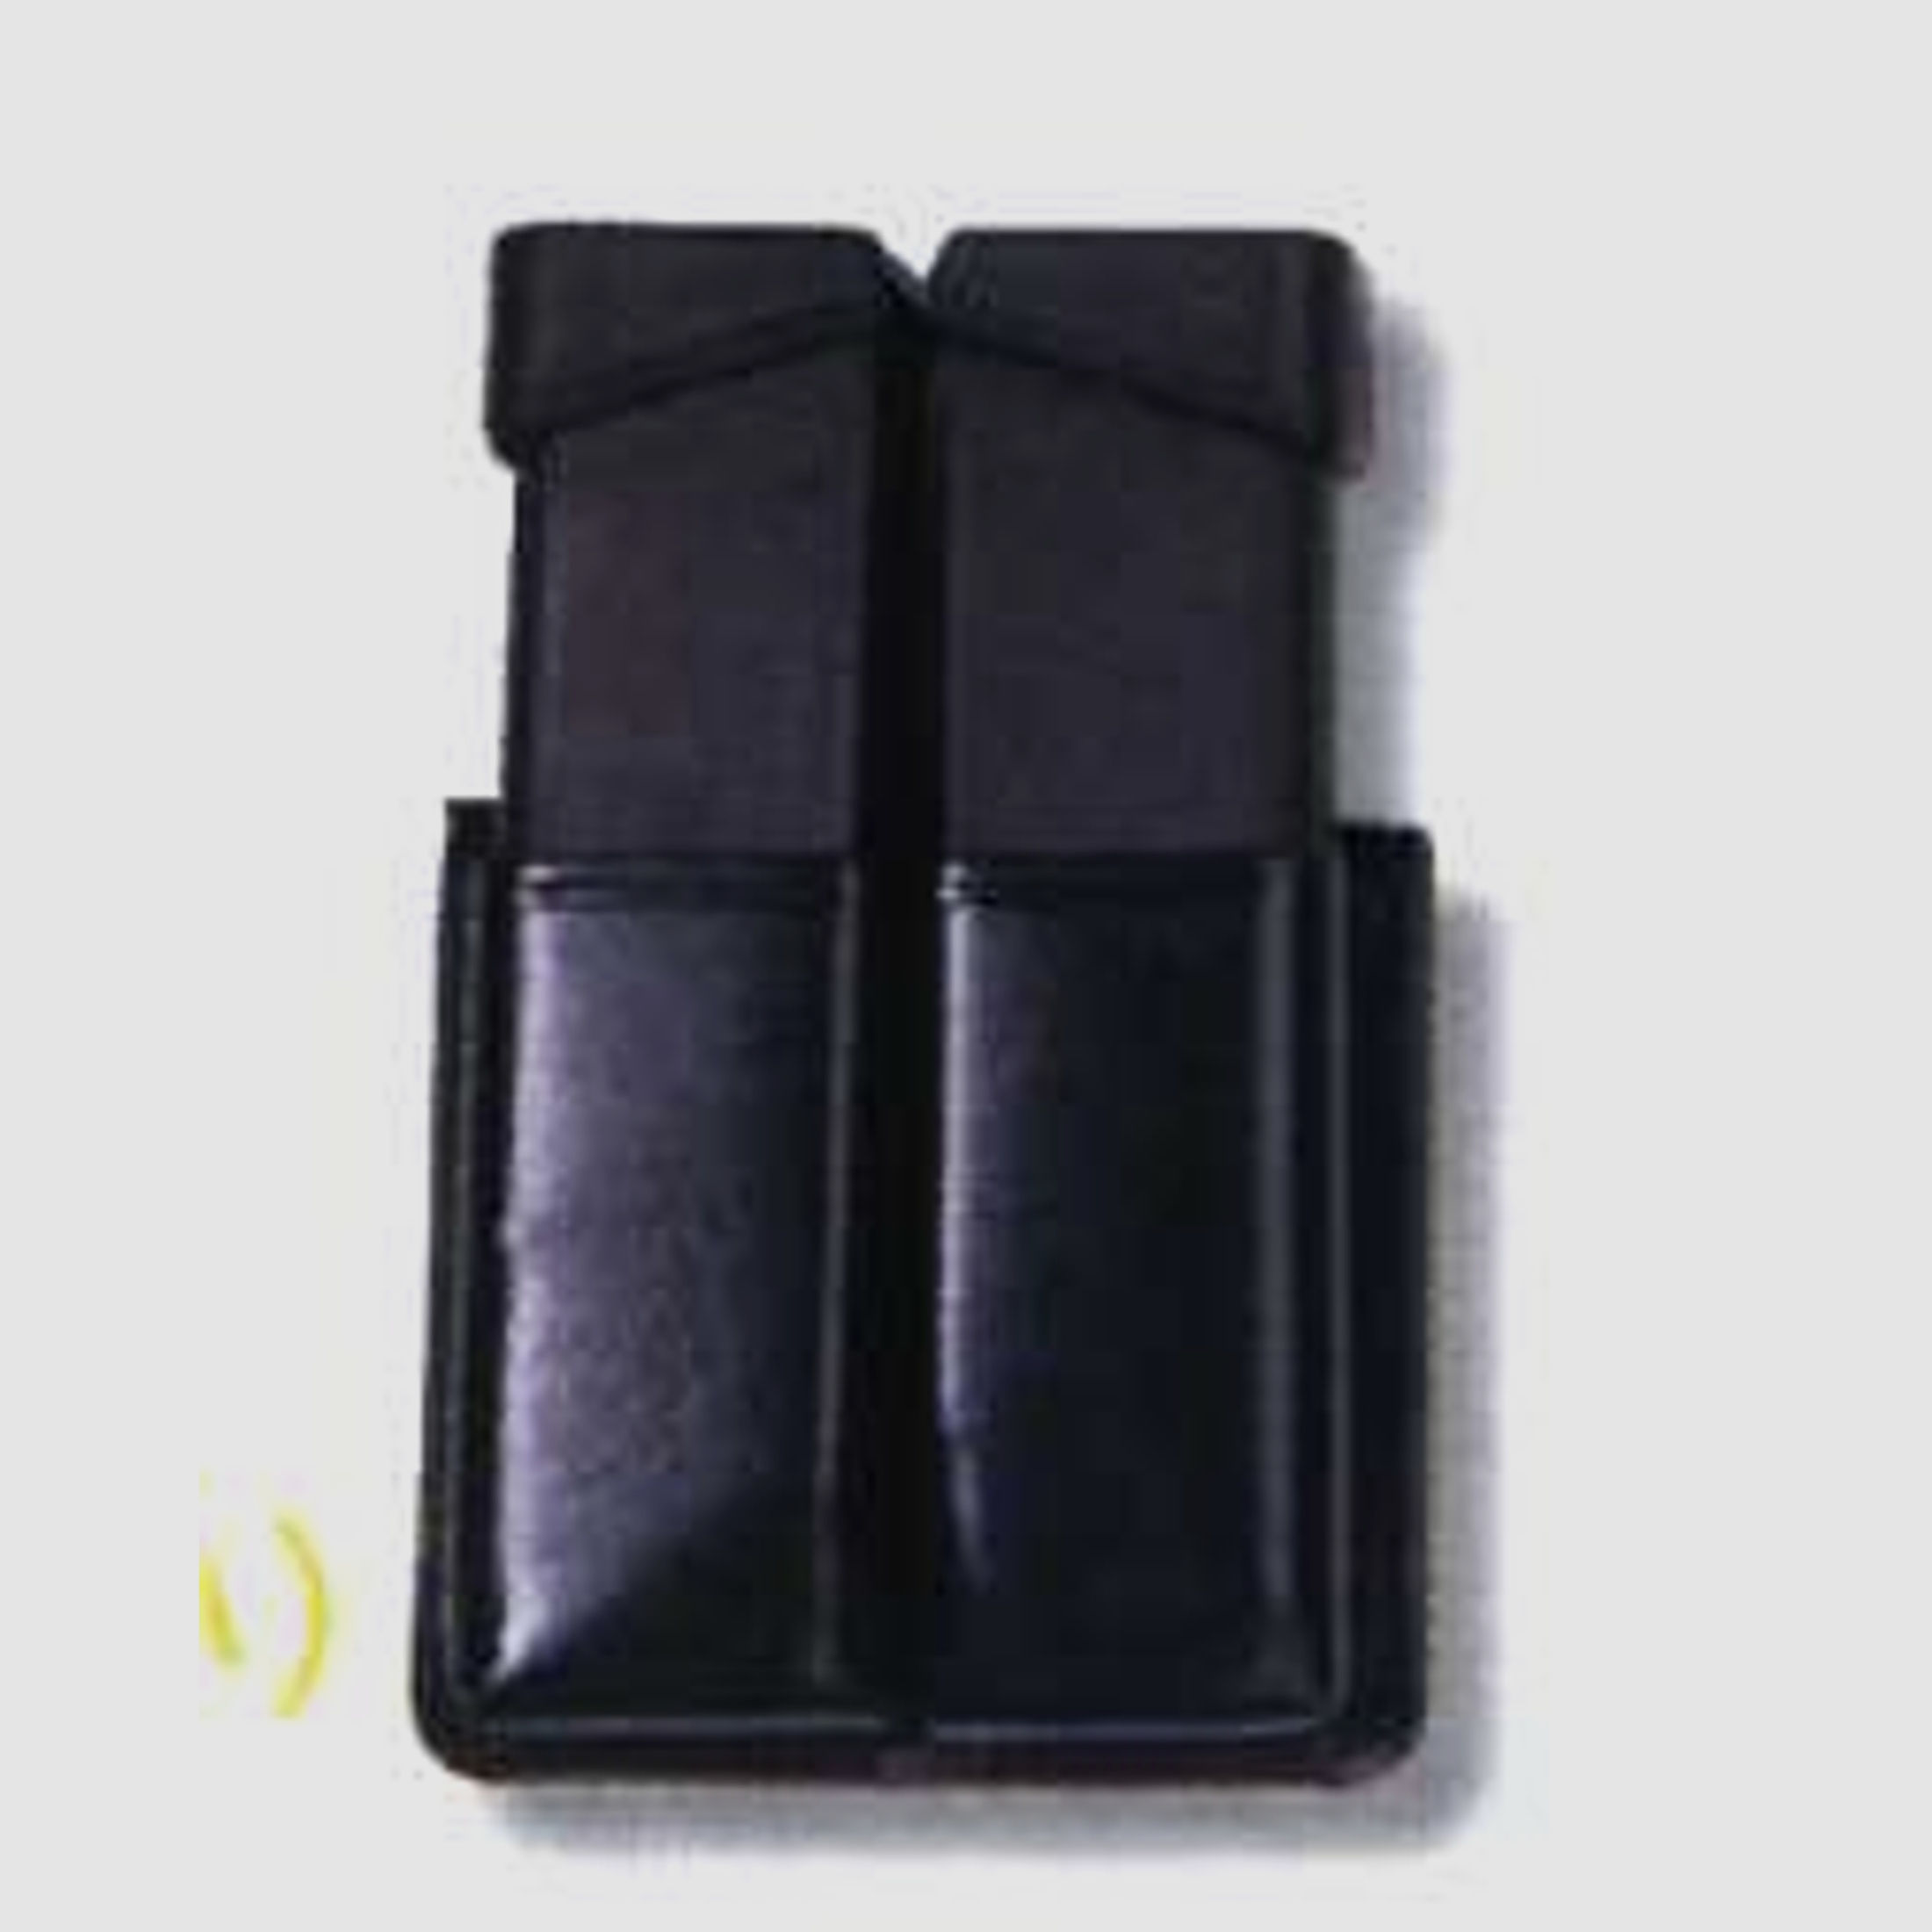 SICKINGER Magazintasche f. Glock17/22/19/23-STI-HK 9mm 62824 Twin Box schwarz